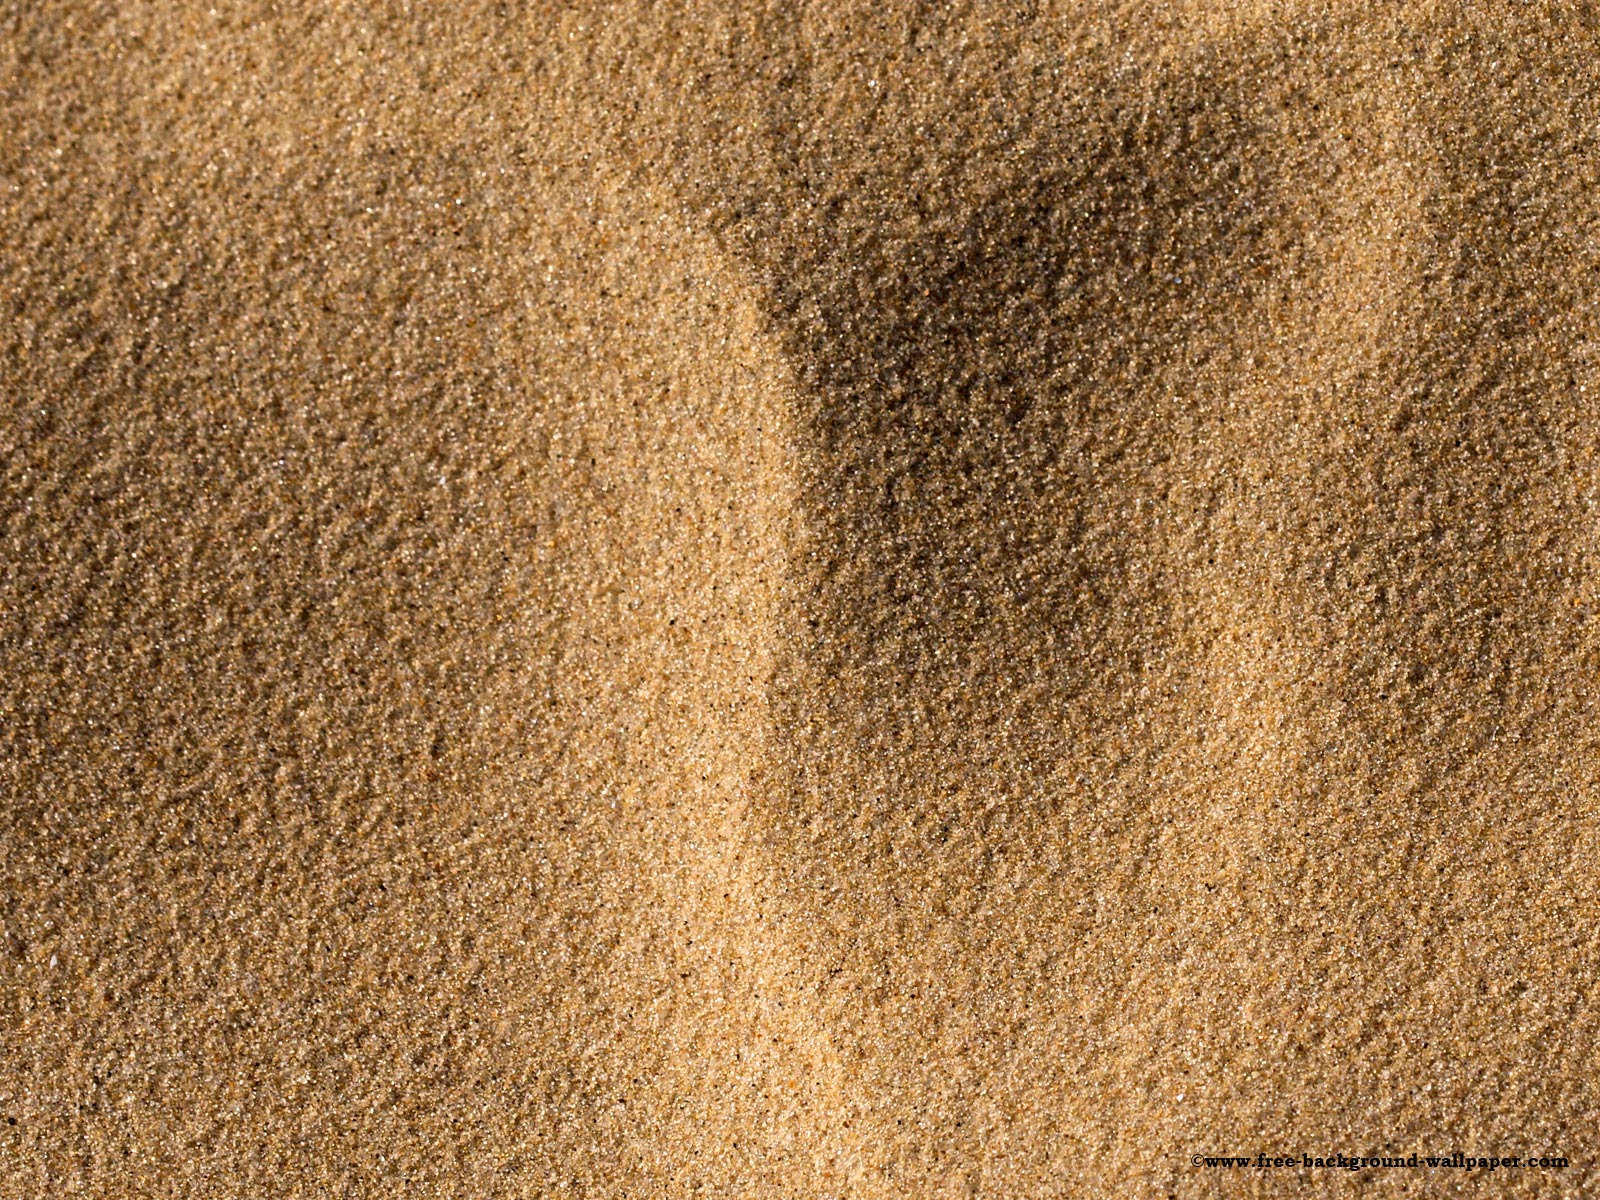 Soft Sand Texture Picture Beach Background - 1600x1200 pixels